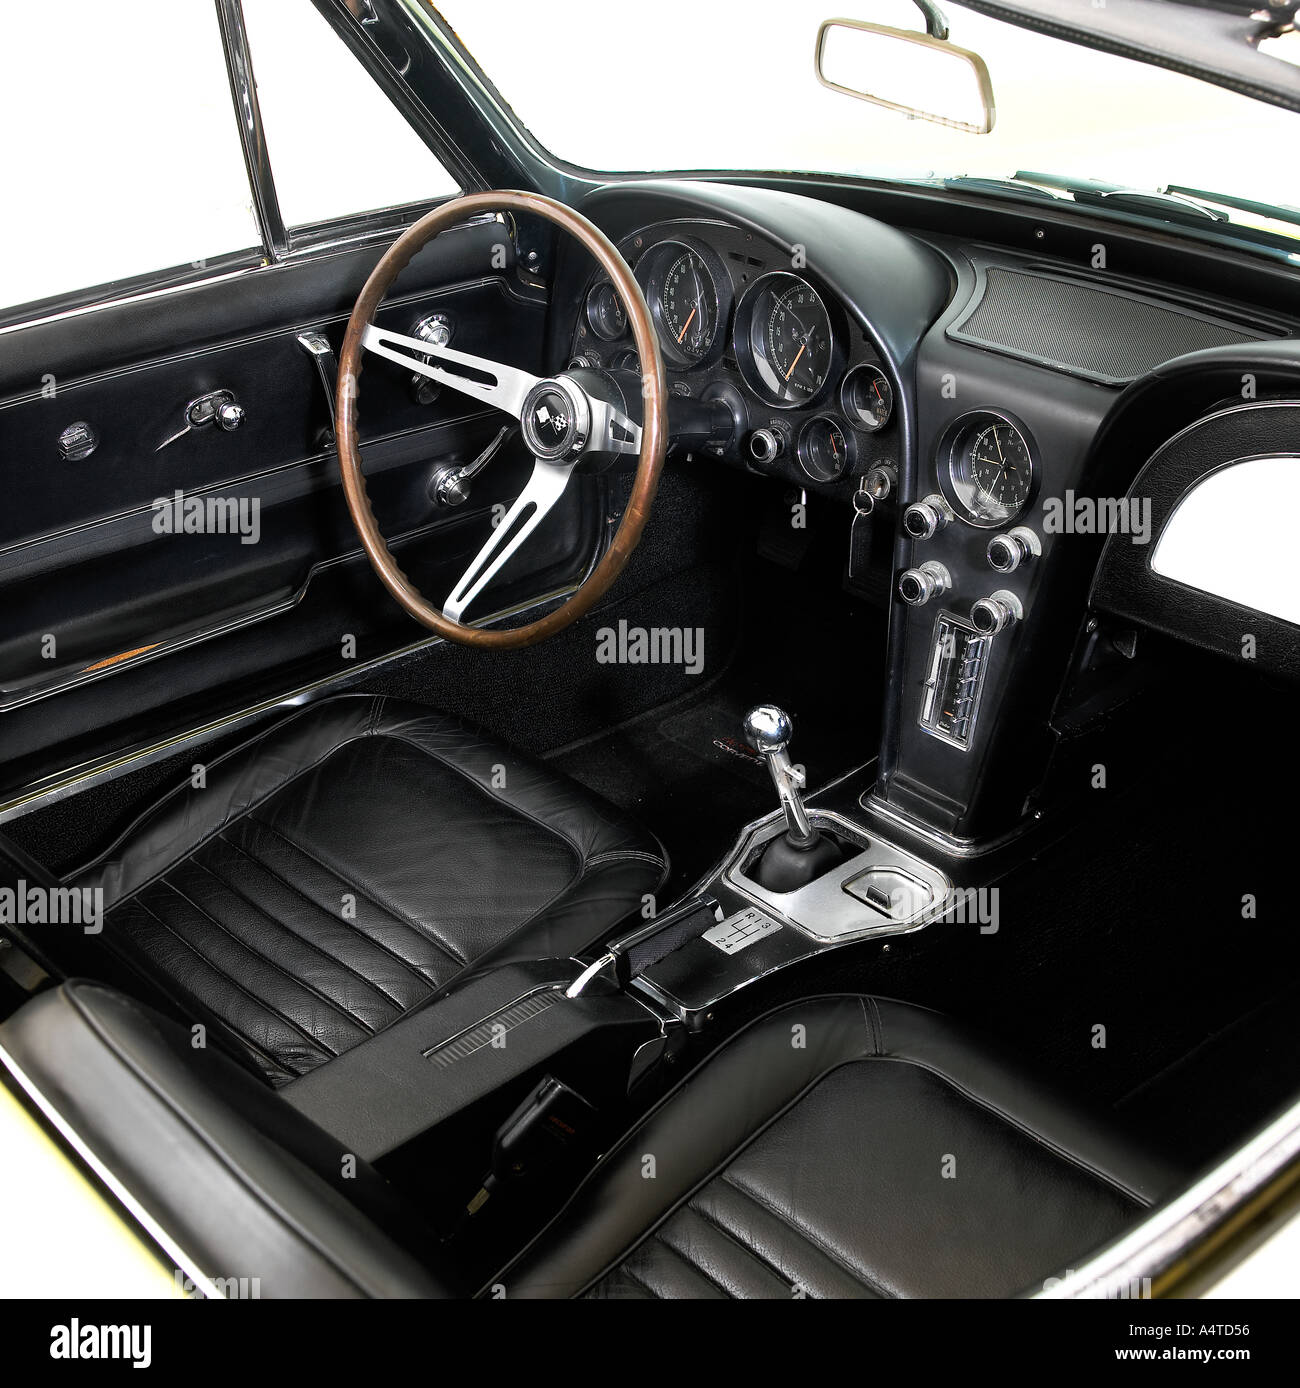 1967 Chevrolet Corvette Stingray Stockfoto